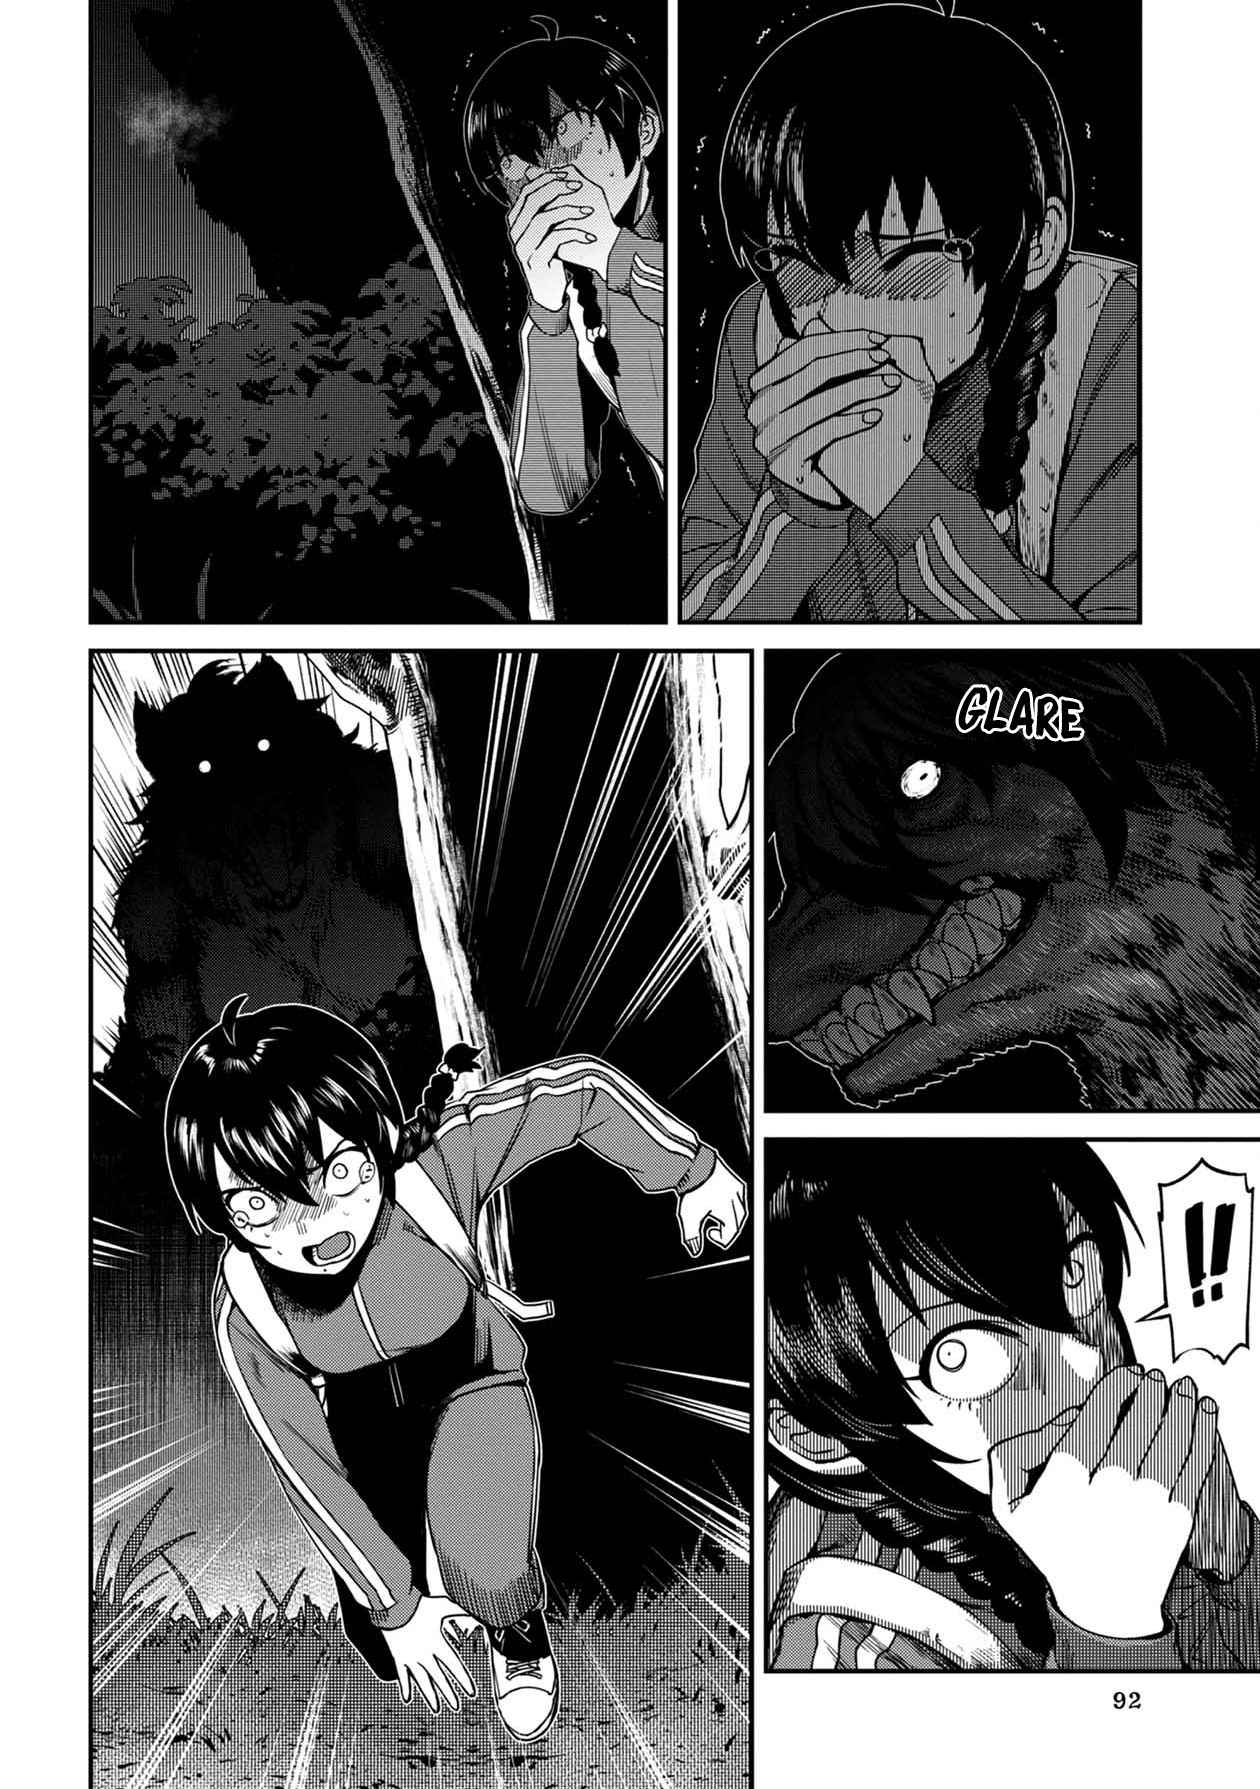 Furyou Taimashi Reina Vol. 1 Ch. 6 Exorcism #6 Werewolf